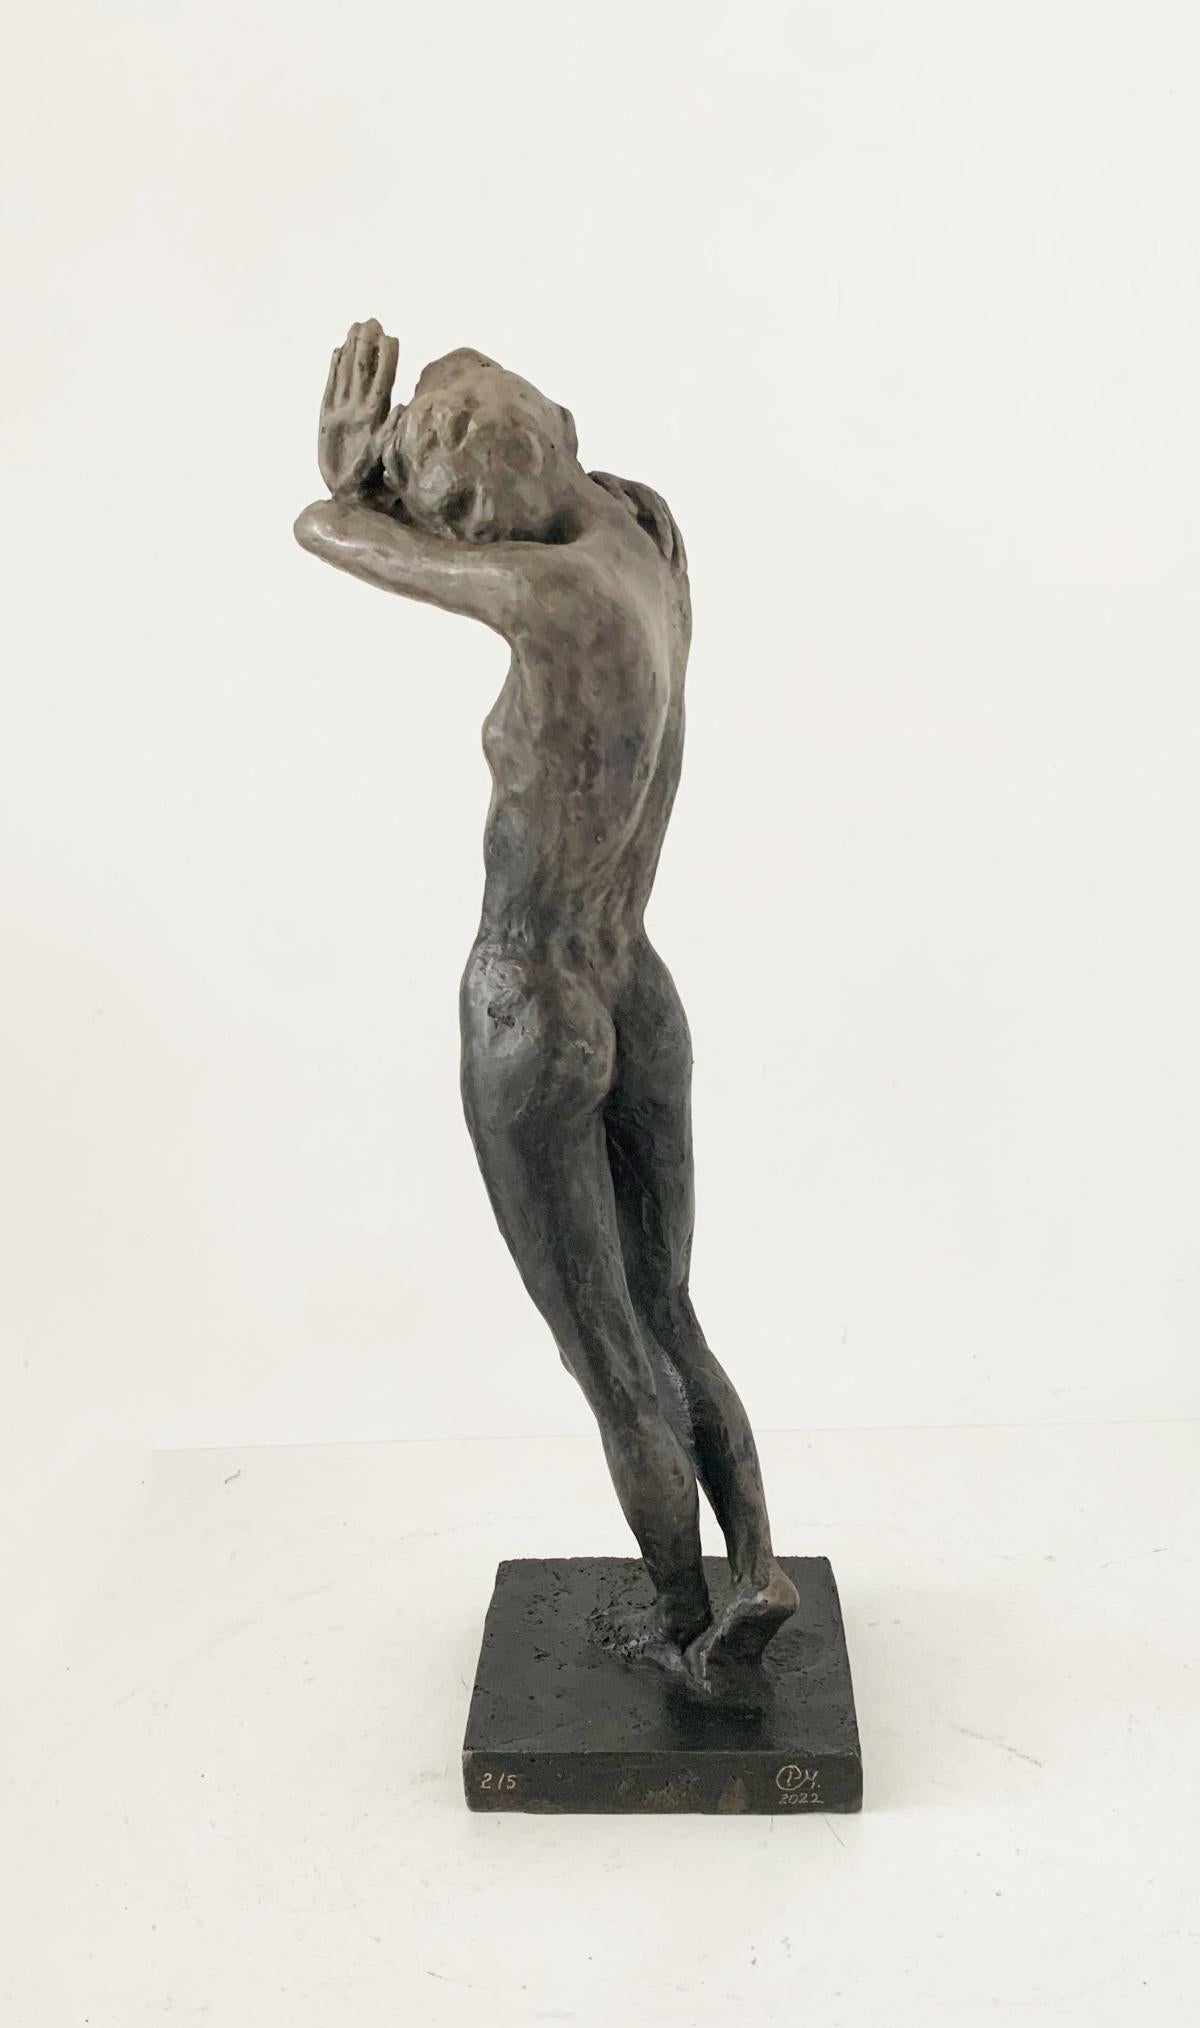 A woman. Contemporary figurative bronze sculpture, Polish art, Limited edition - Sculpture by Olga Prokop-Misniakiewicz